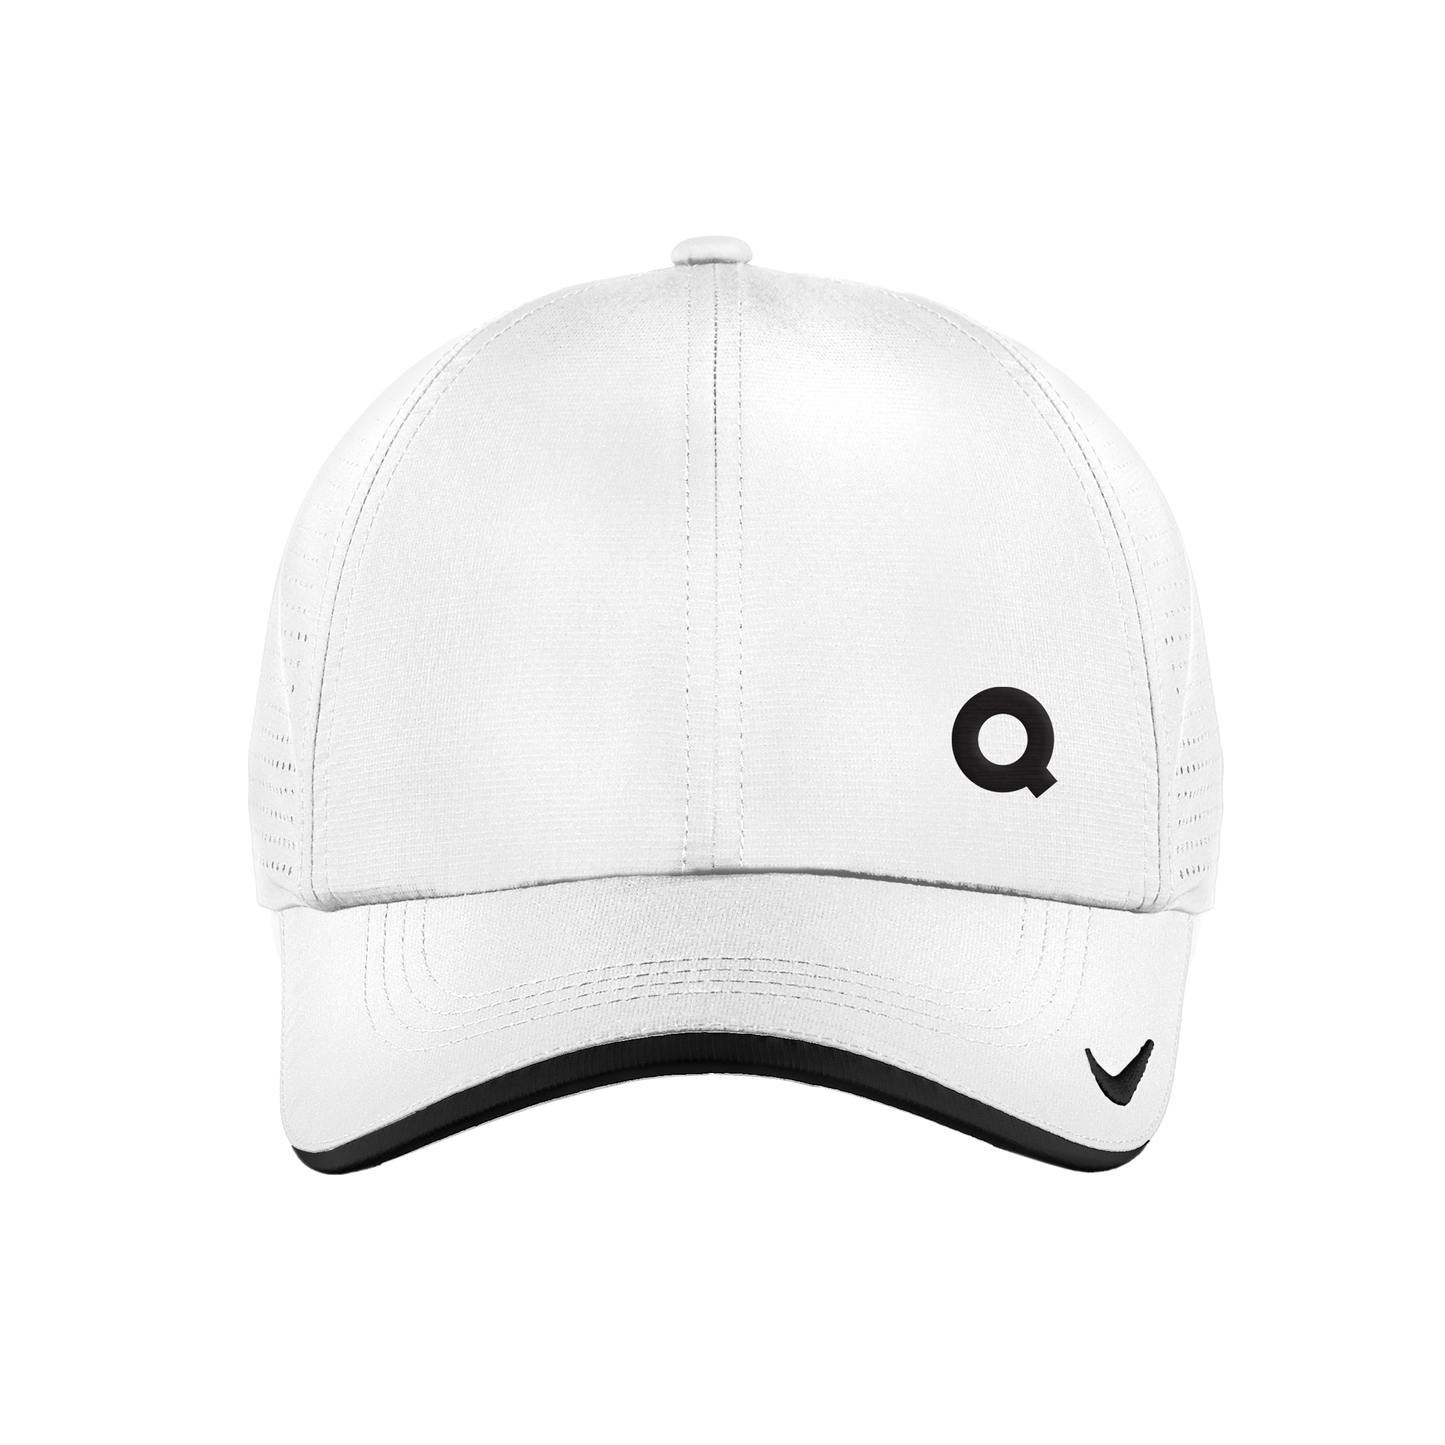 Nike Golf Dri-FIT Swoosh Perforated Cap